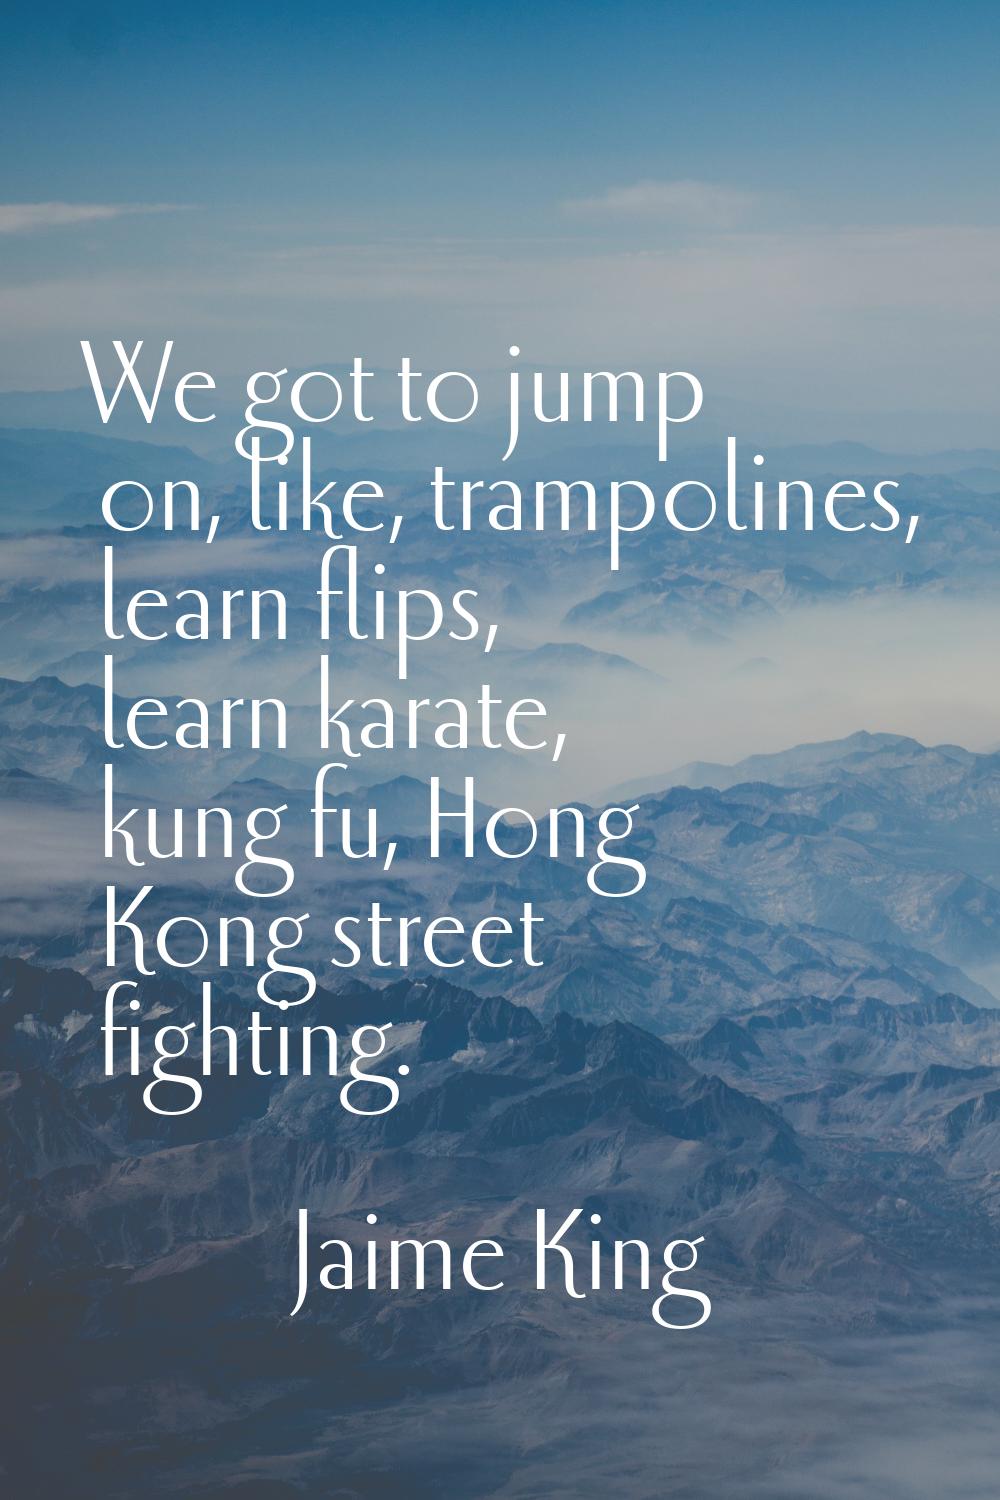 We got to jump on, like, trampolines, learn flips, learn karate, kung fu, Hong Kong street fighting